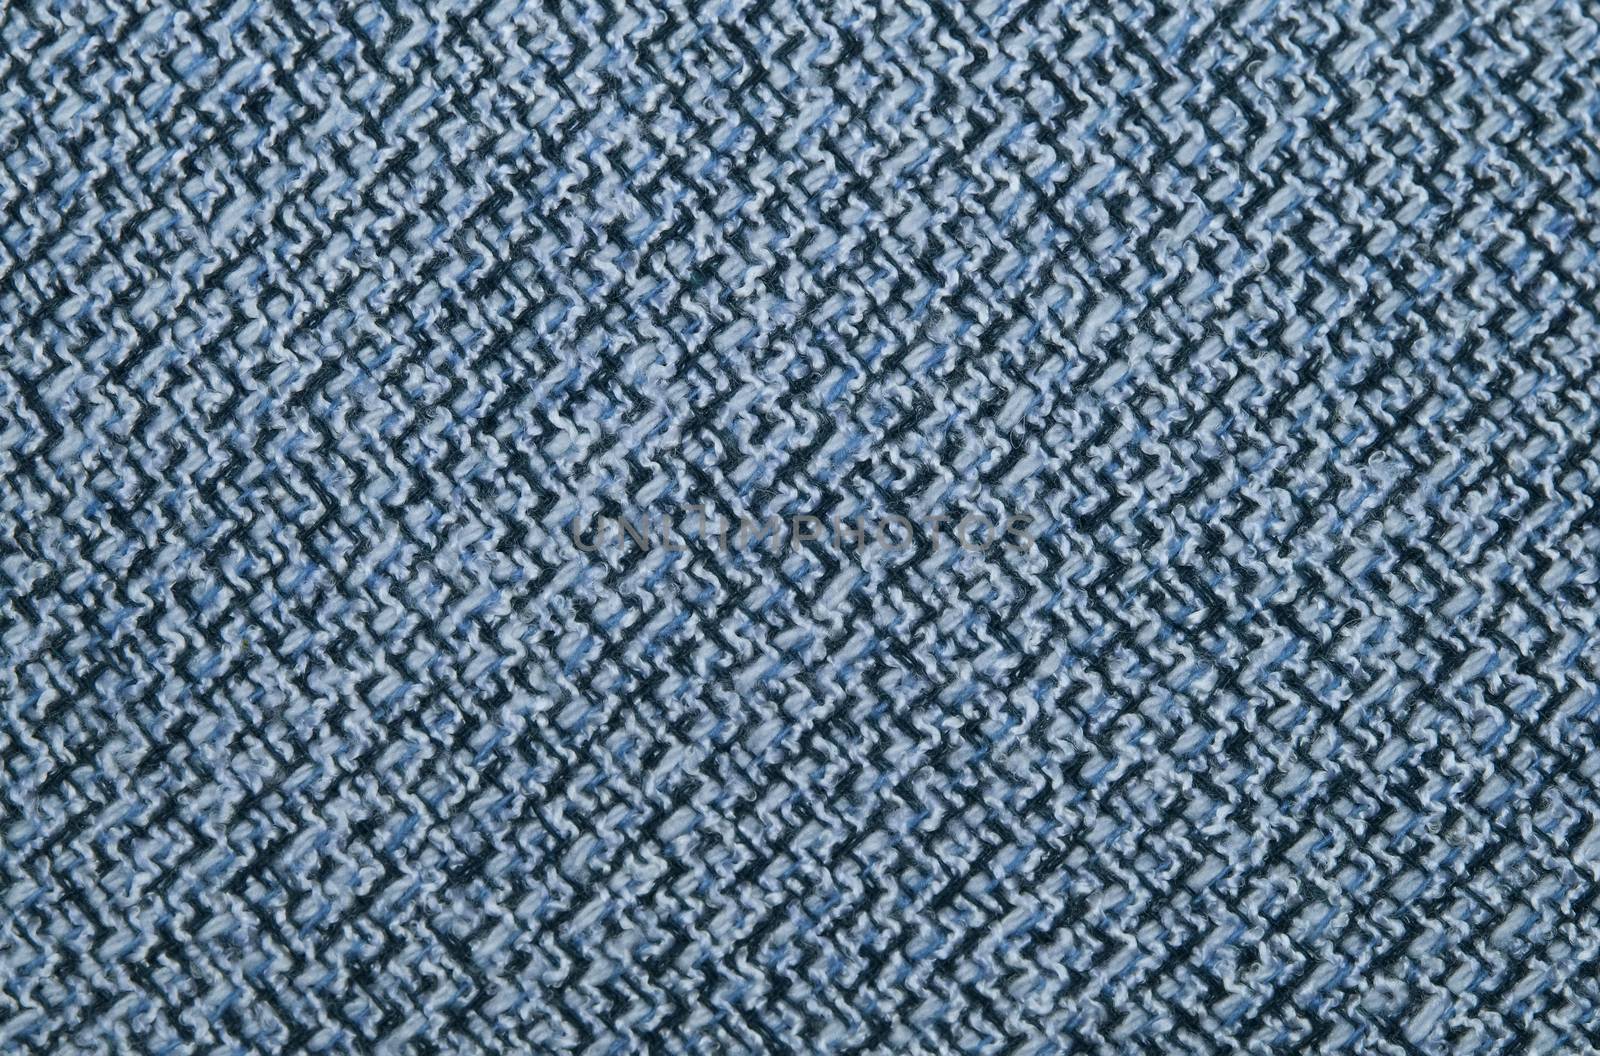 tweed  textures, textured melange upholstery fabric background   by KoliadzynskaIryna